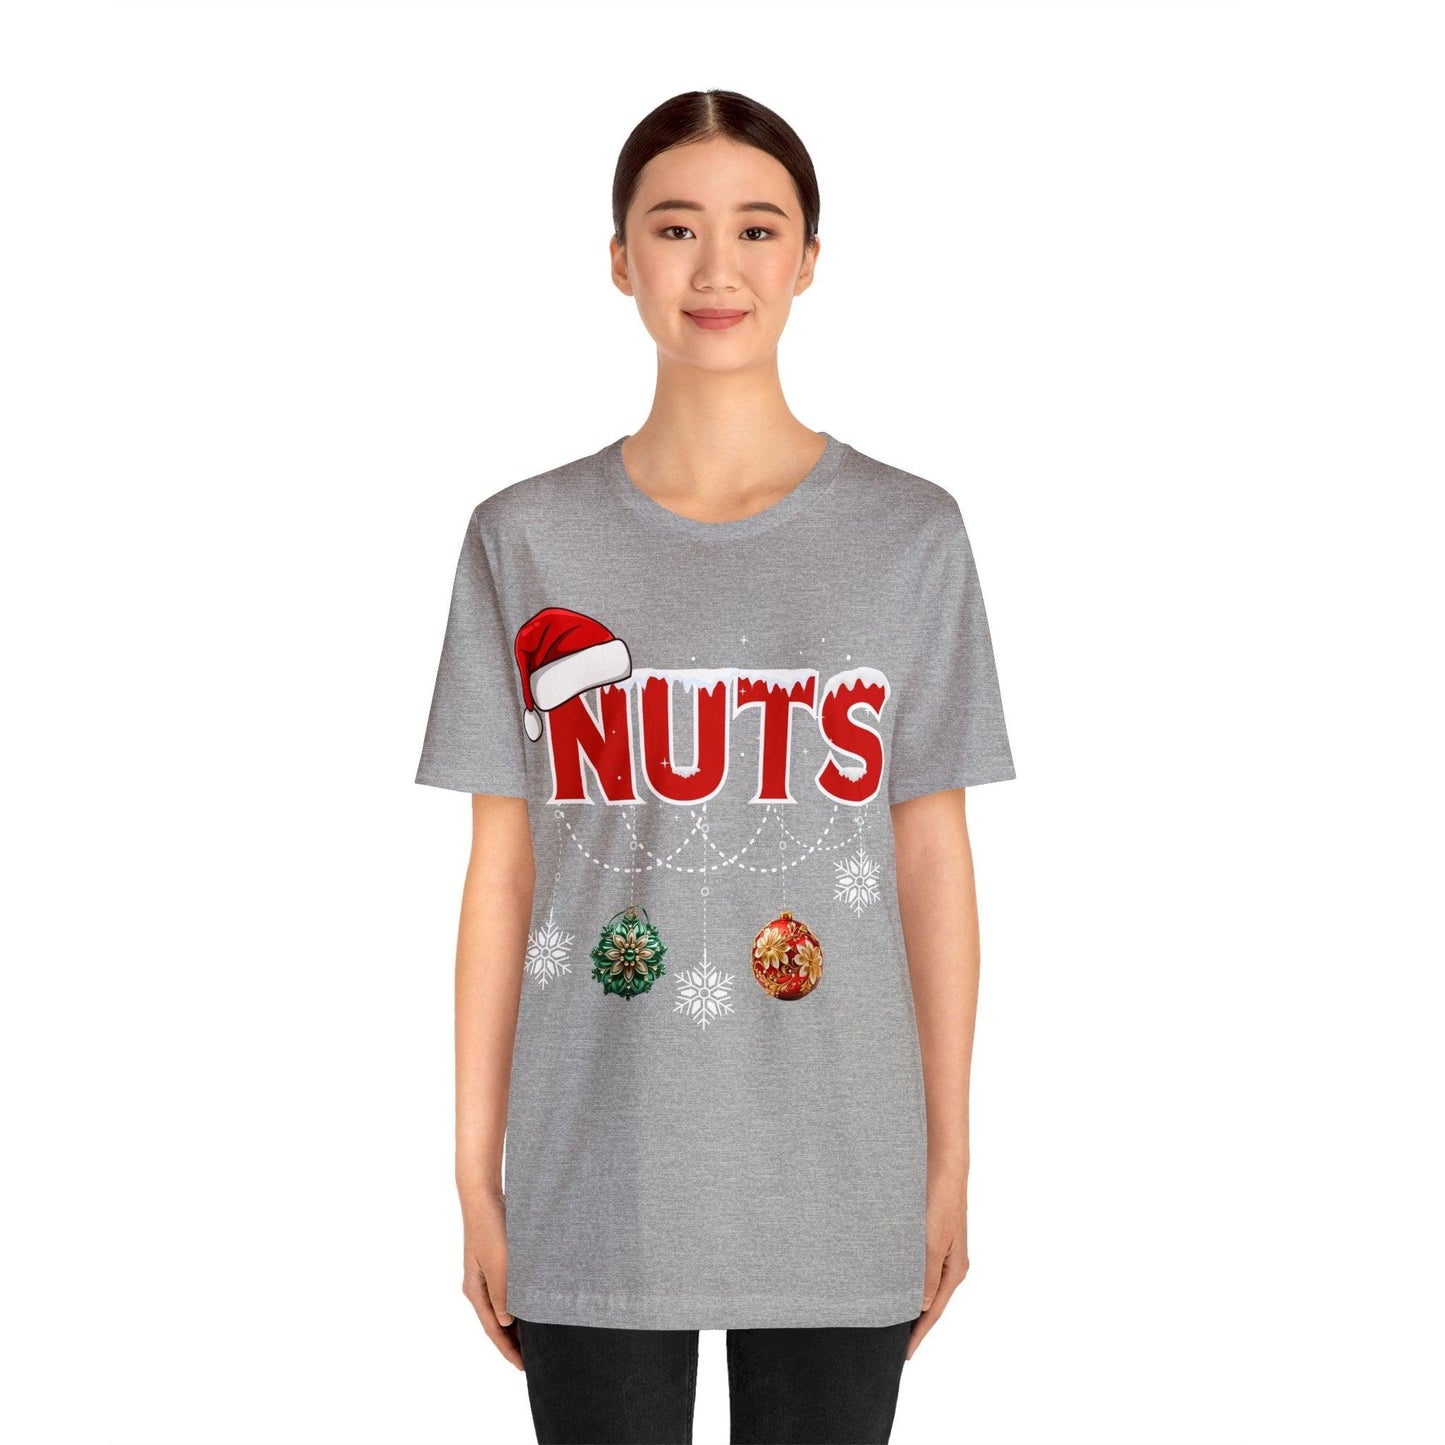 christ nut shirt